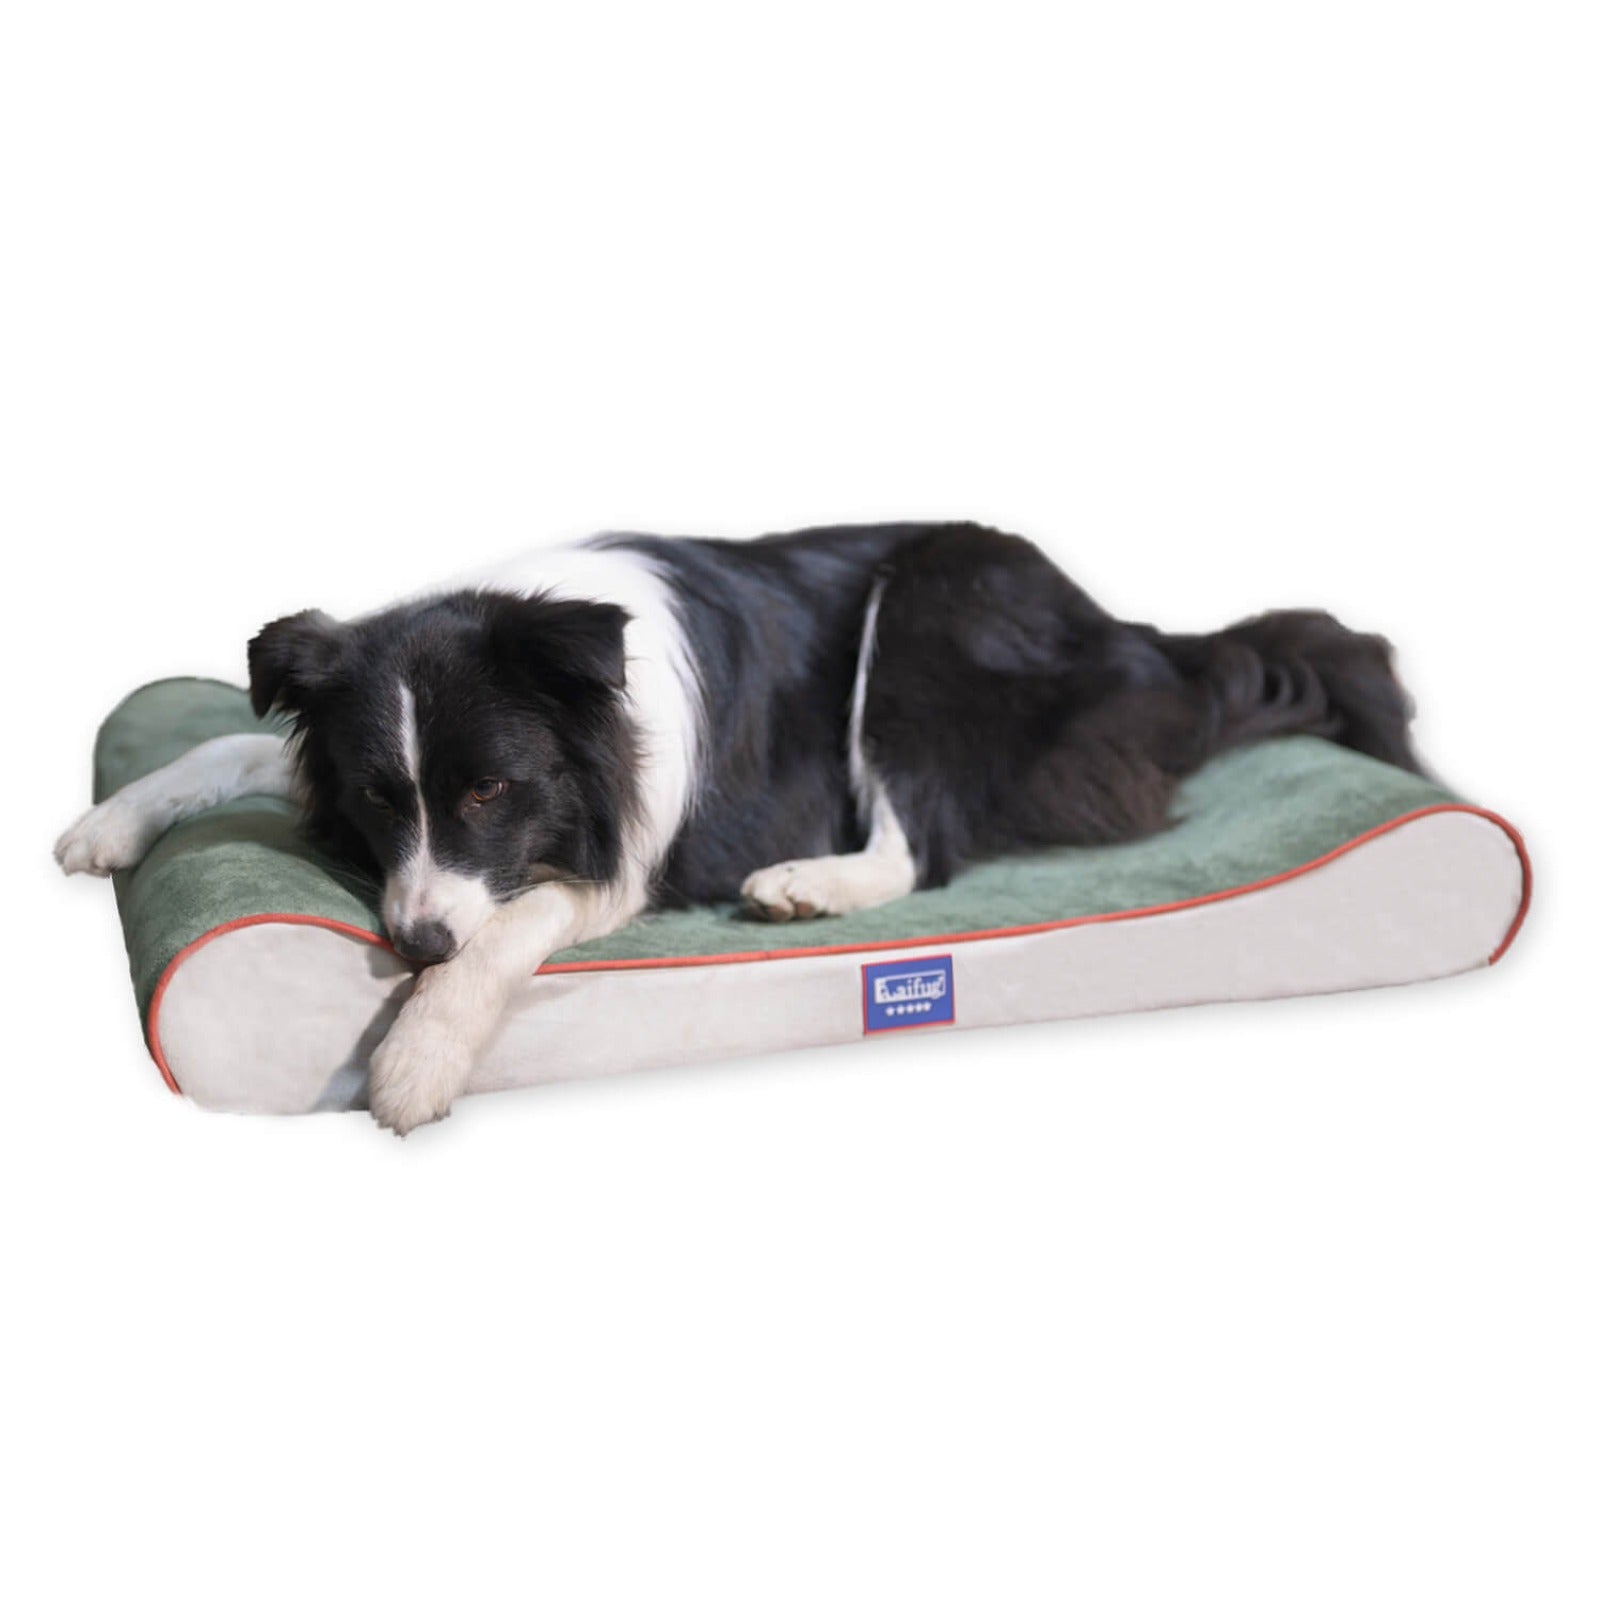 Laifug Pillow Dog Bed